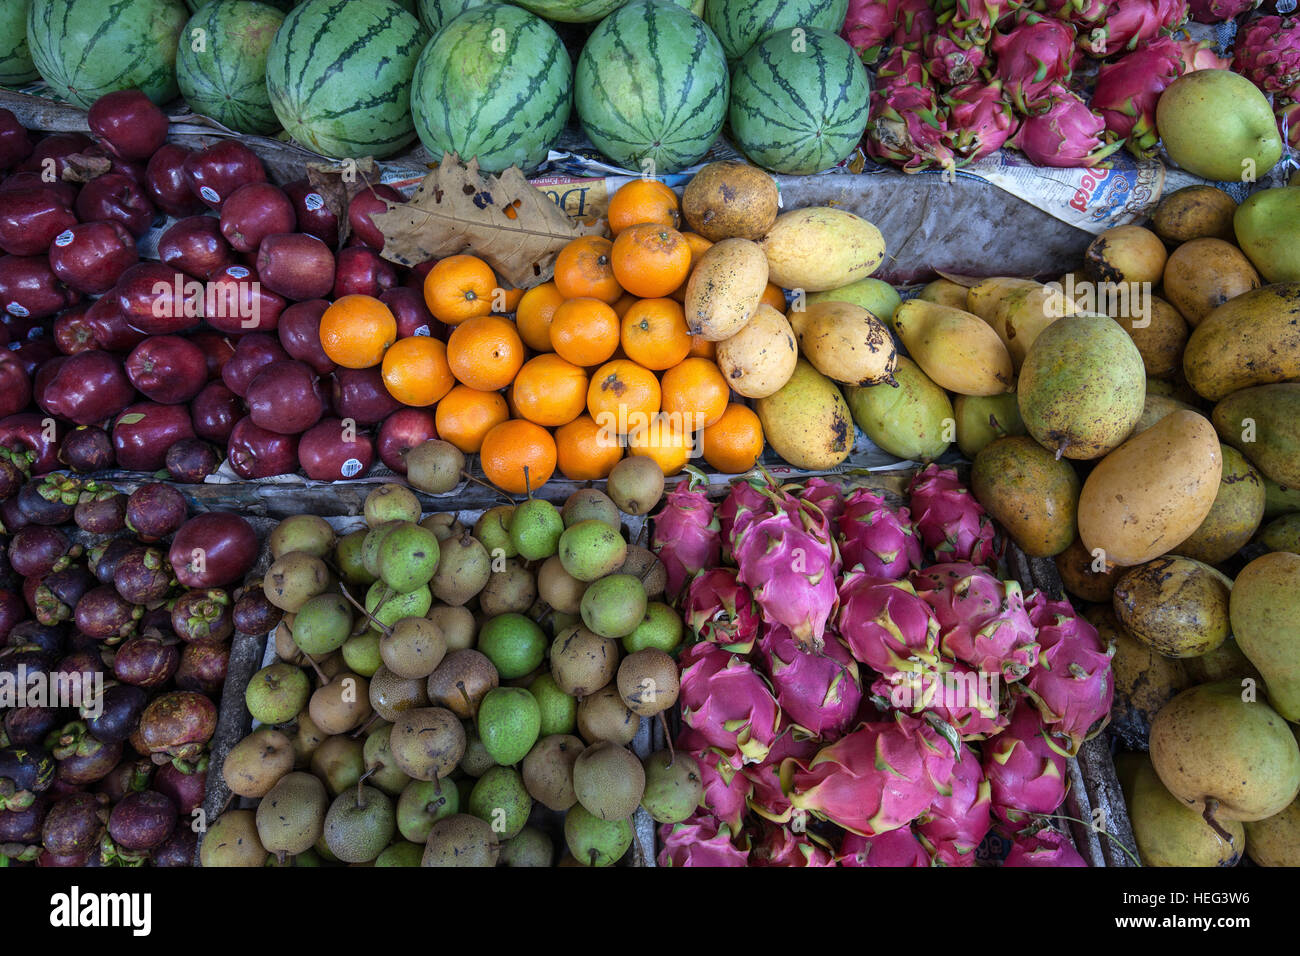 Fruit stall, melons, apples, mango, oranges, dragon fruit, mangosteens, Central Province, Sri Lanka Stock Photo